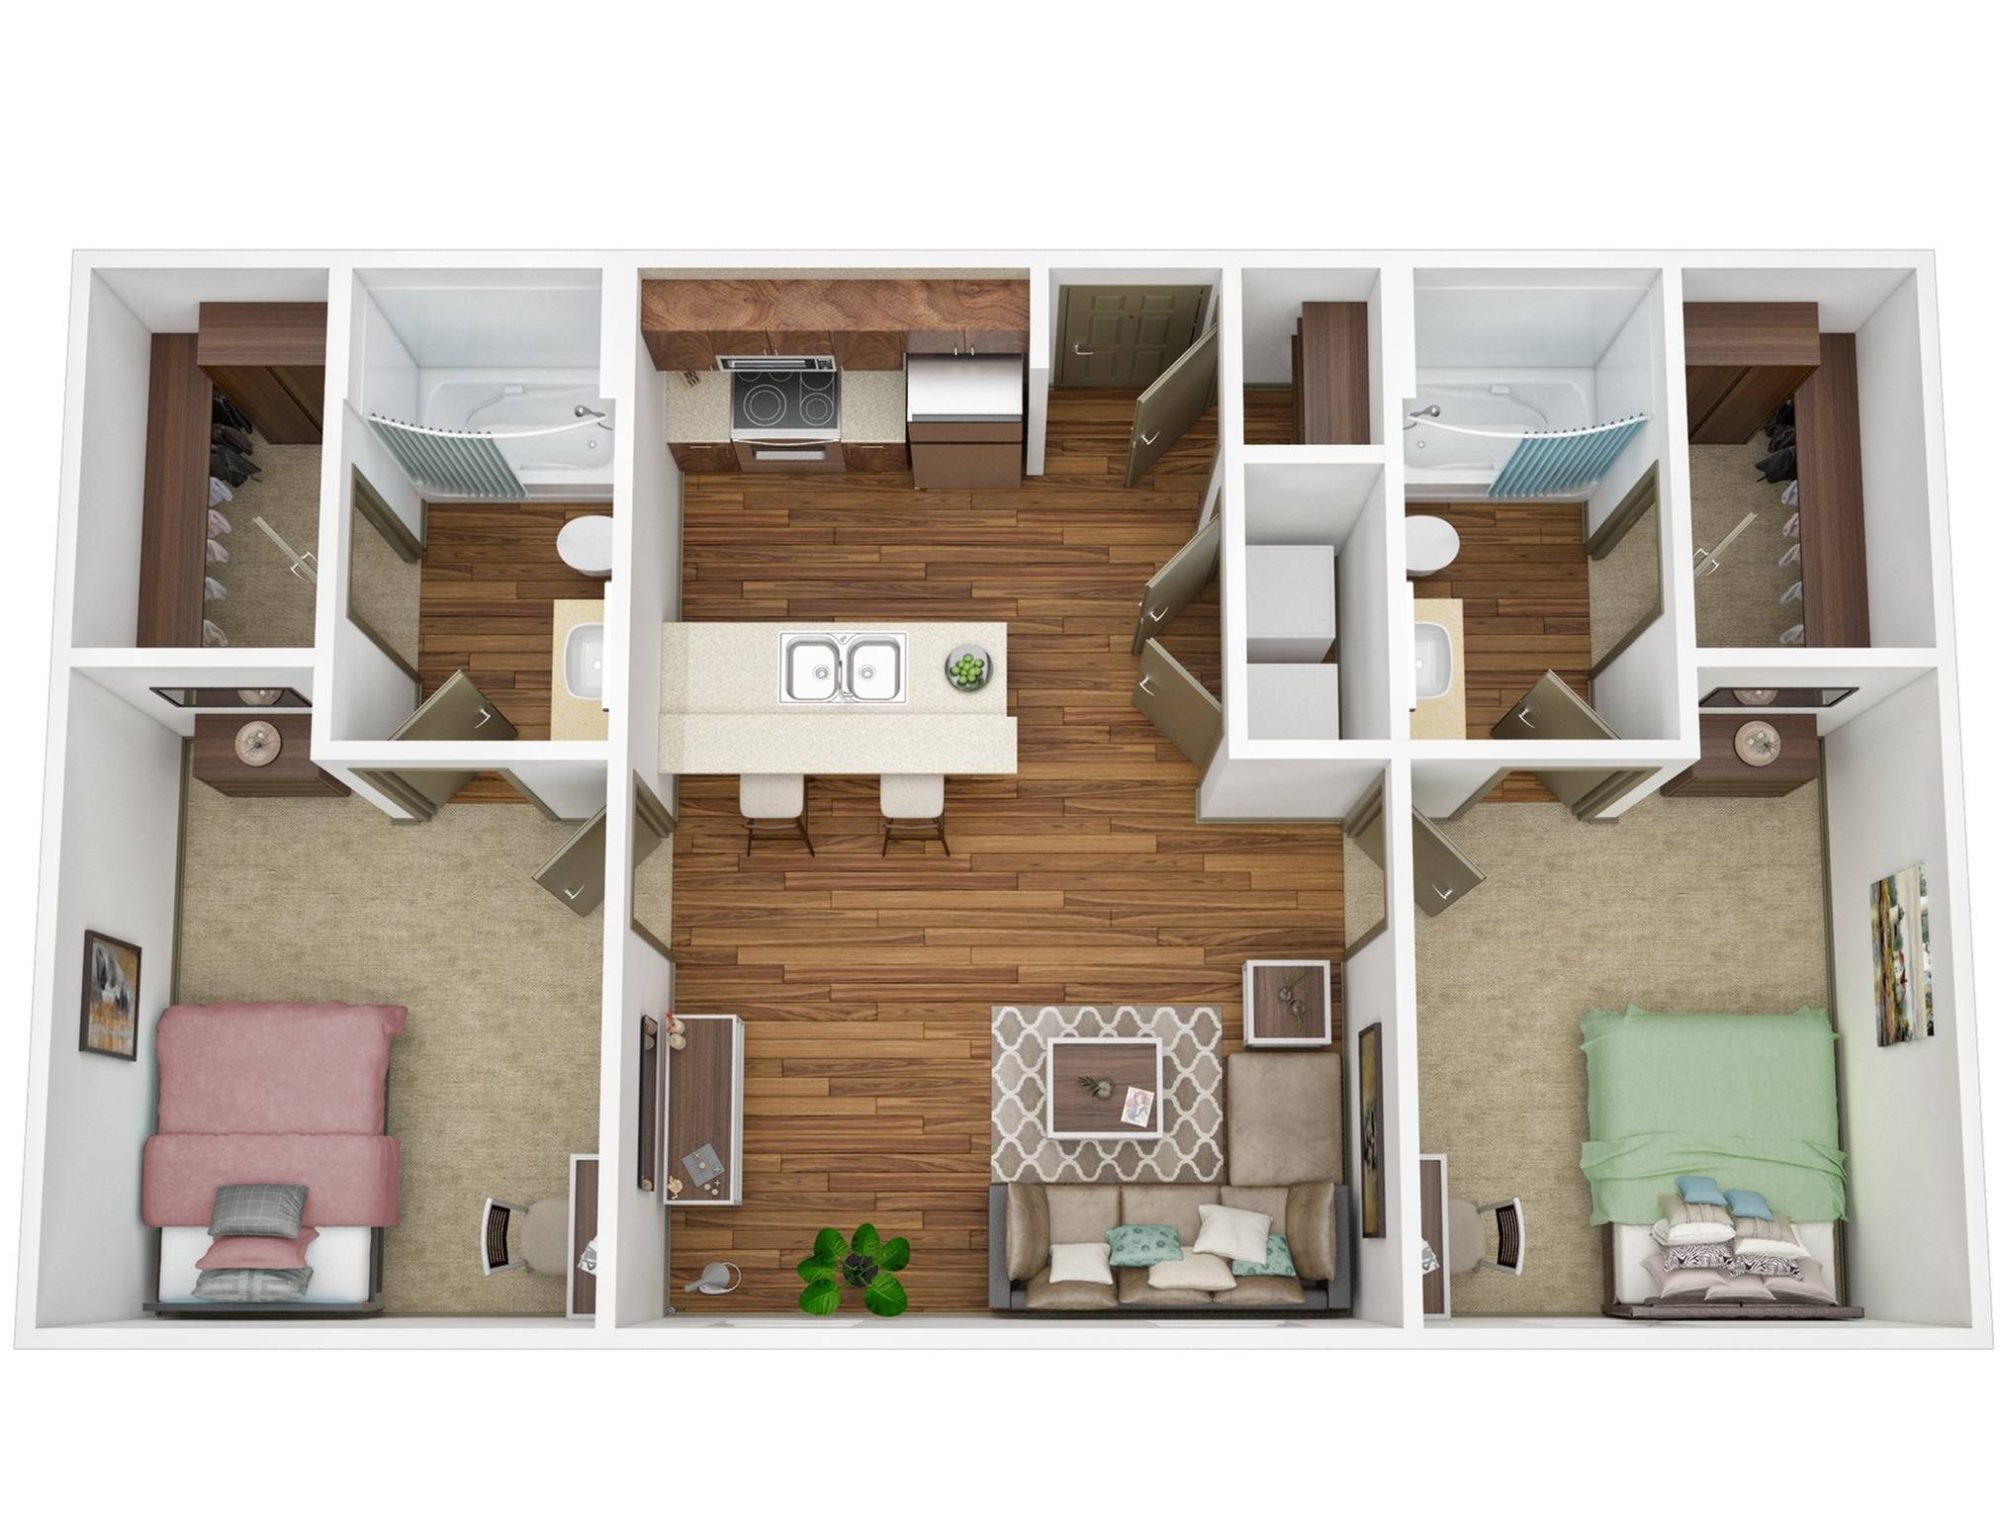 A 3D image of the 2BR/2BA – Platinum floorplan, a 912 squarefoot, 2 bed / 2 bath unit